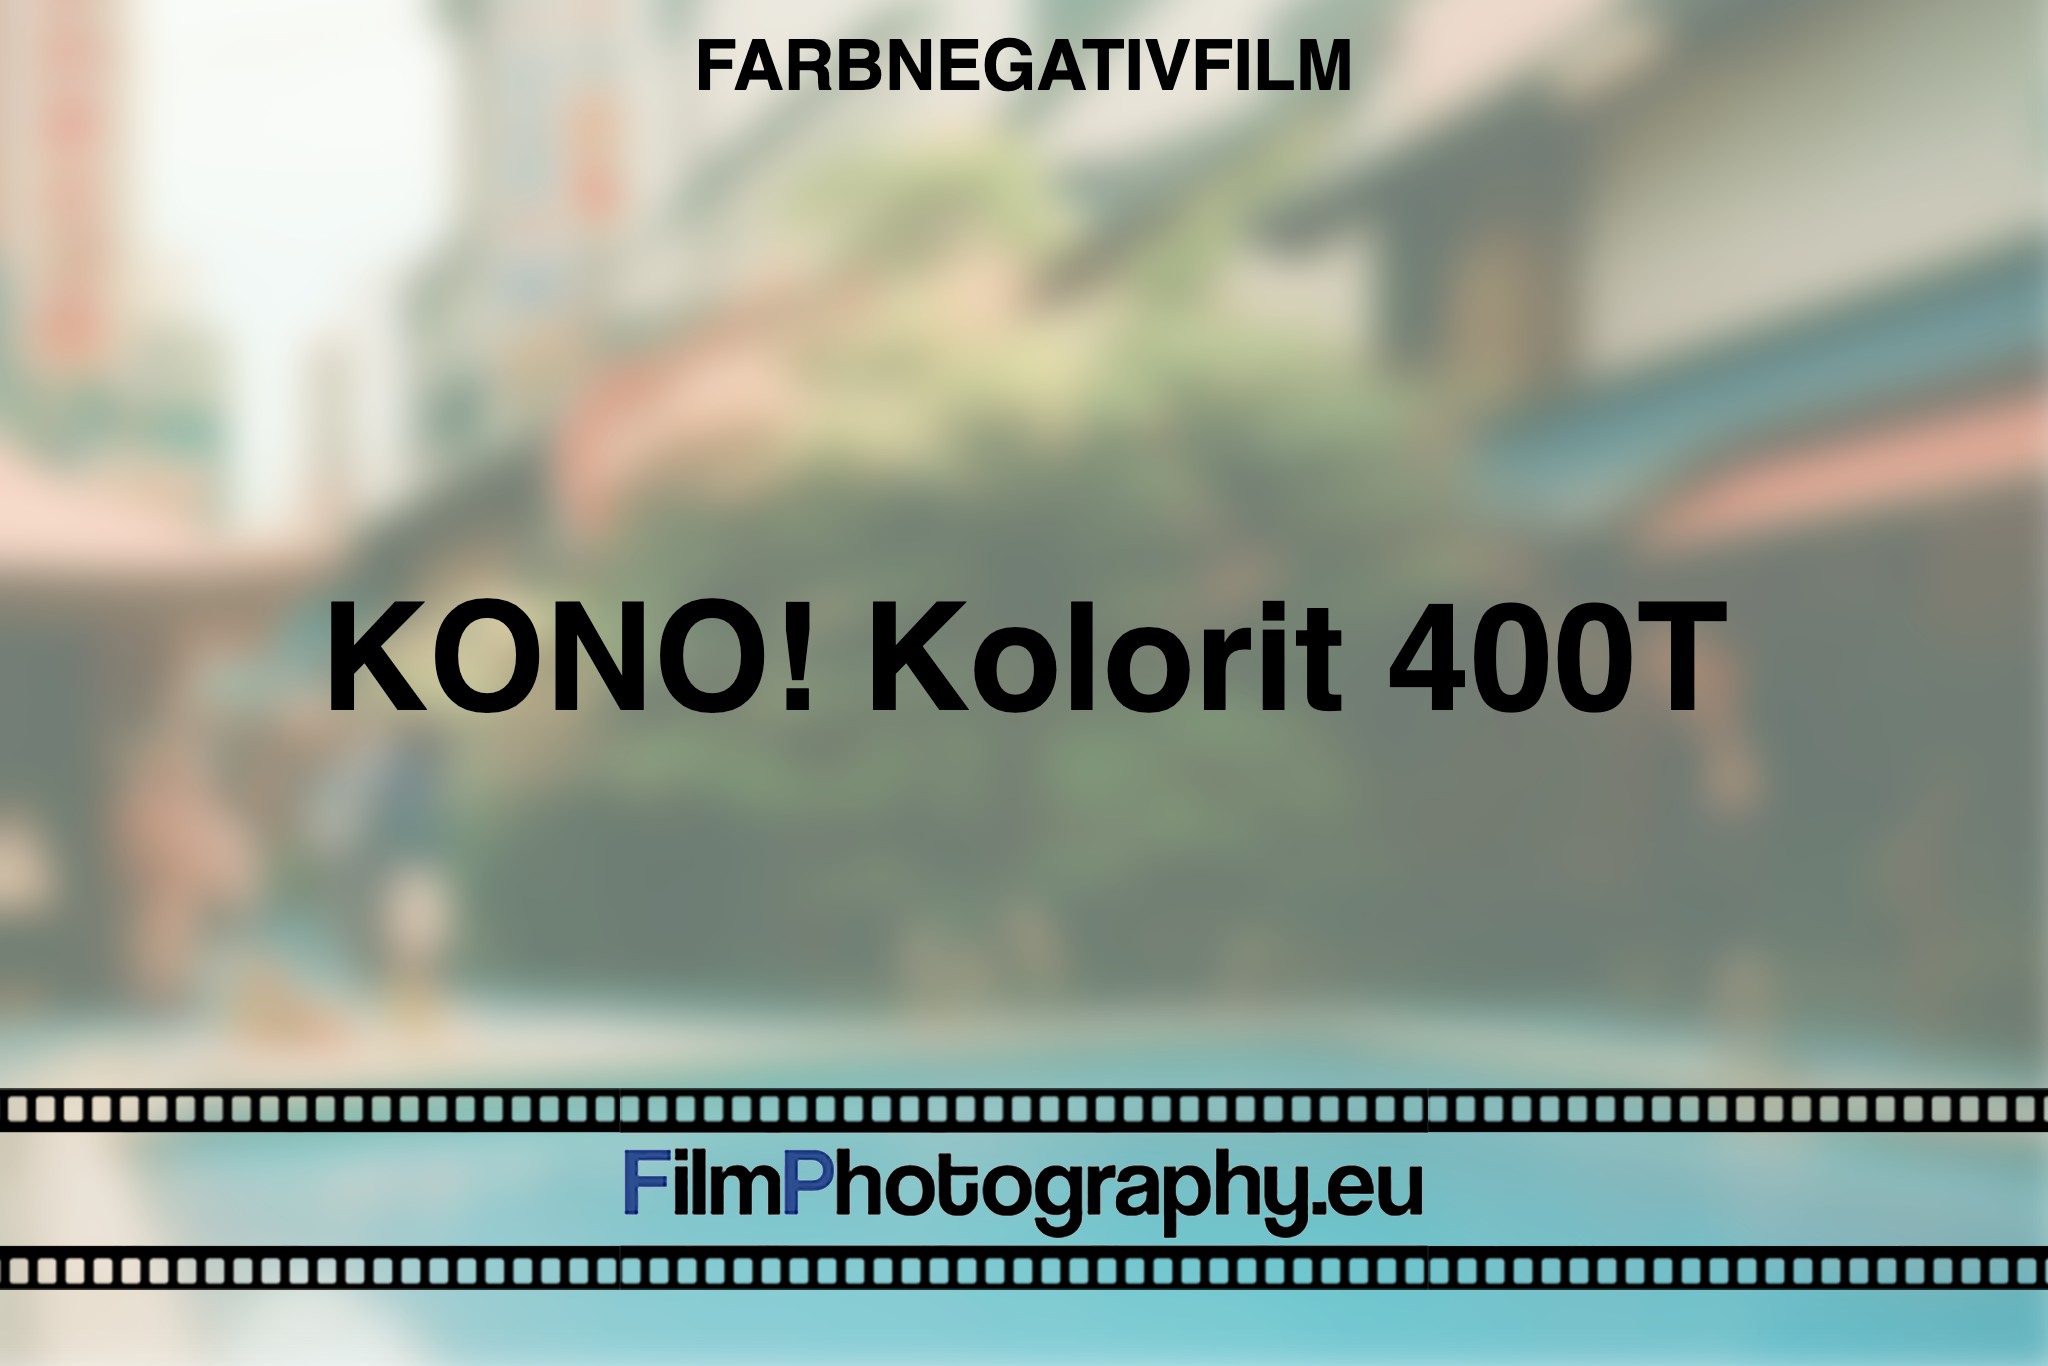 kono-kolorit-400t-farbnegativfilm-bnv